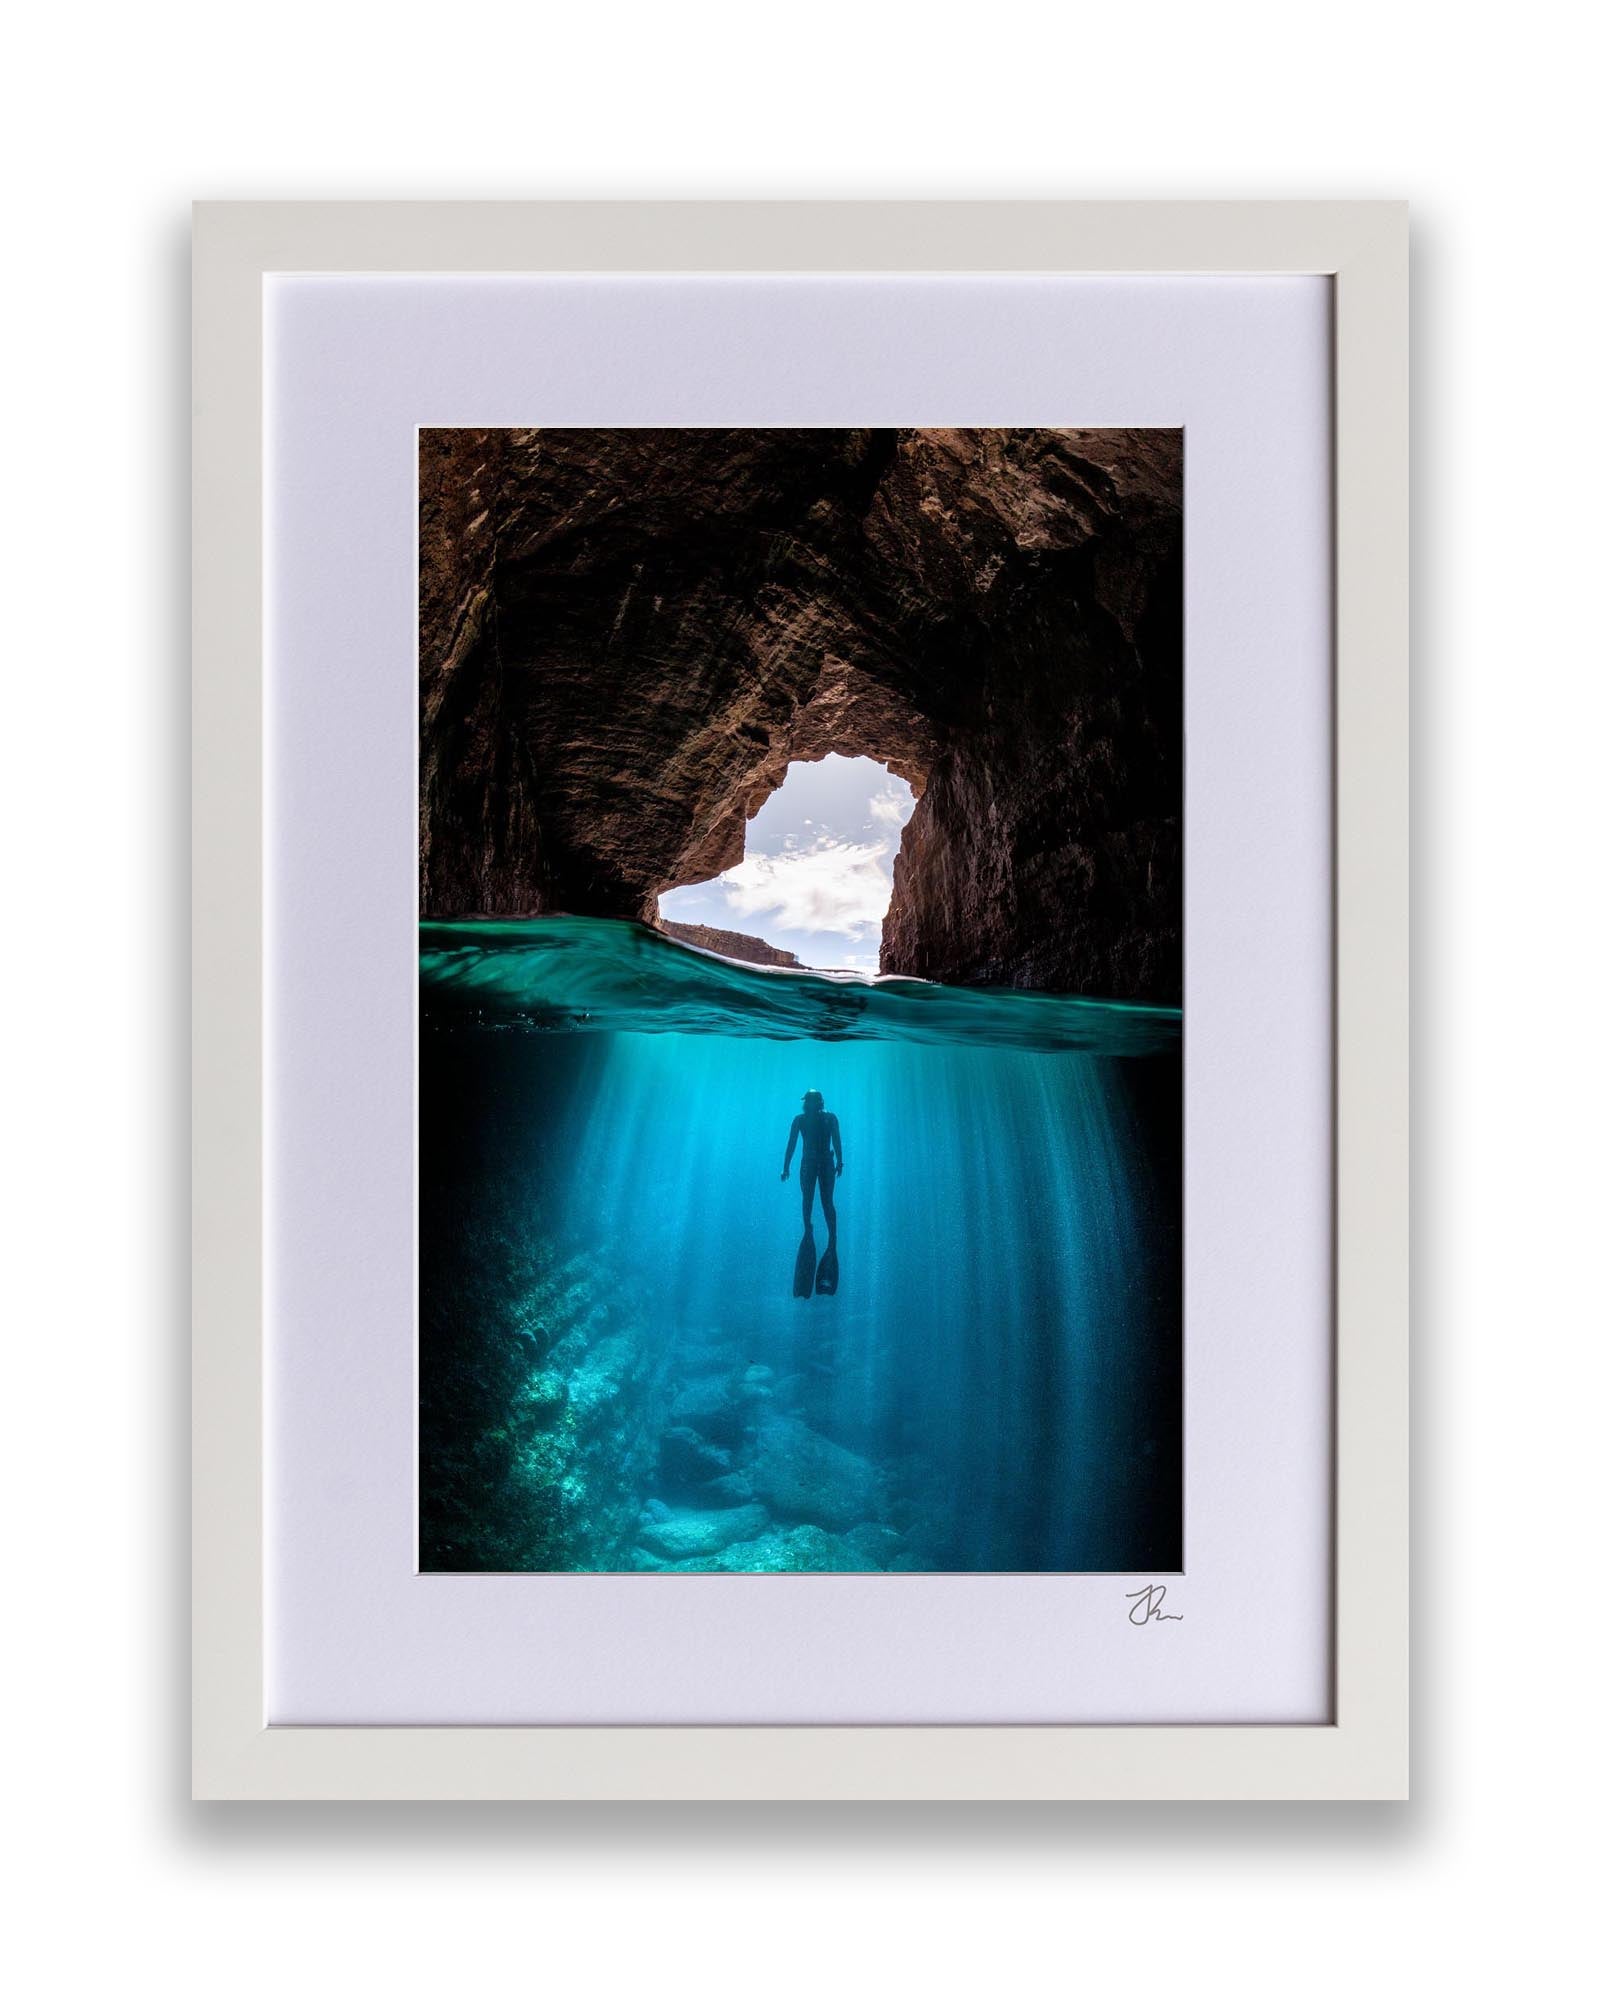 Sea Cave Diving Jervis Bay